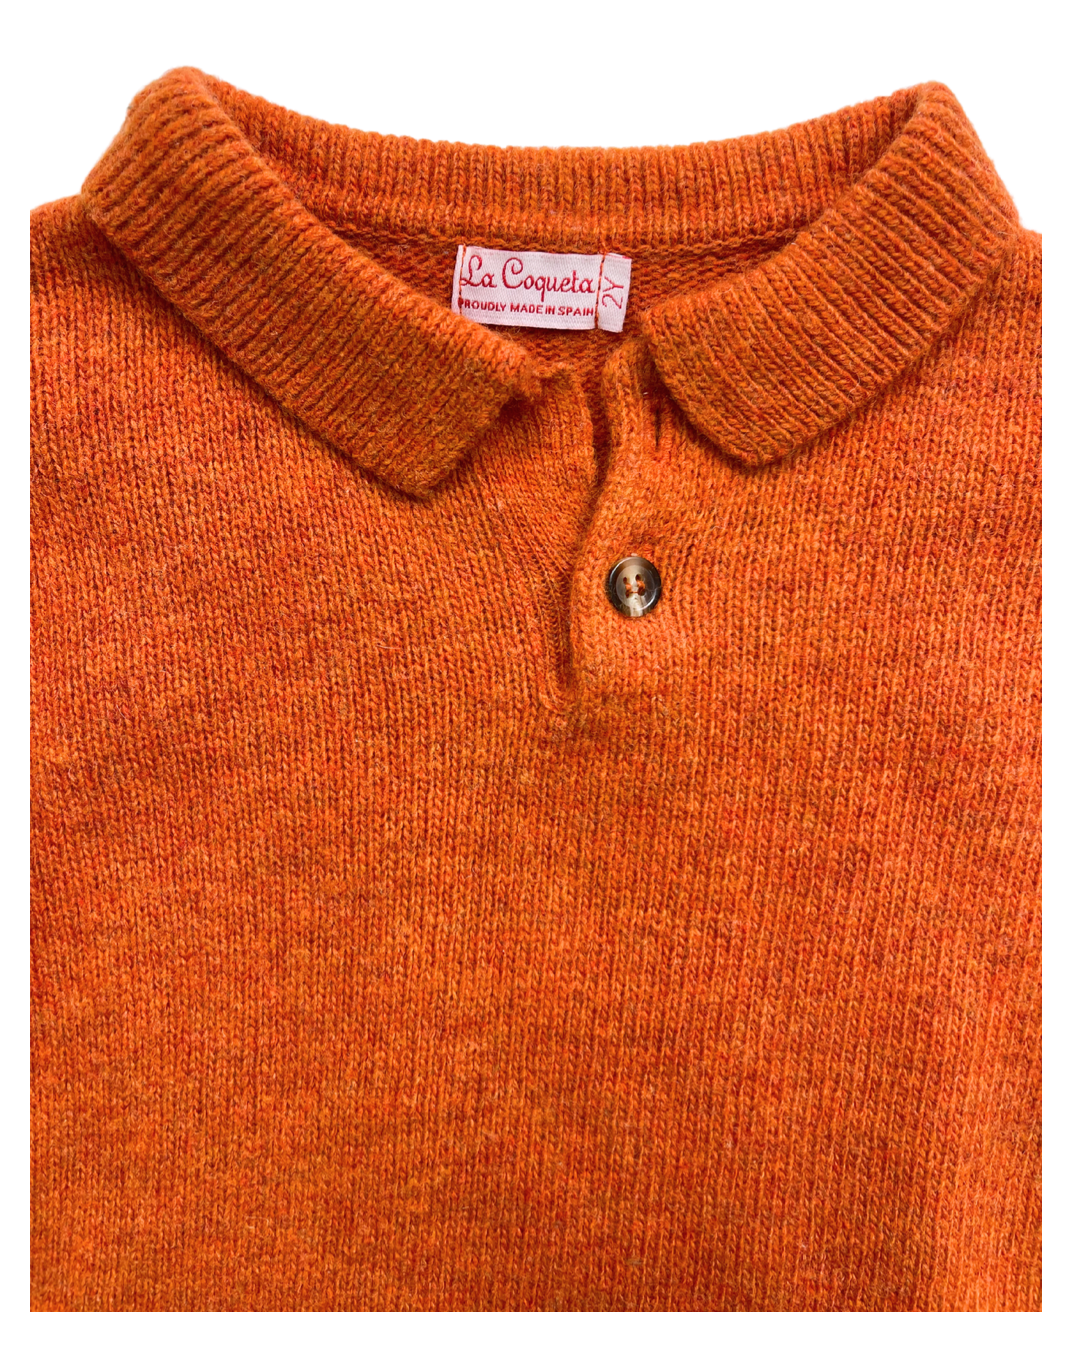 LA COQUETA - Pull en laine orange - 2 ans